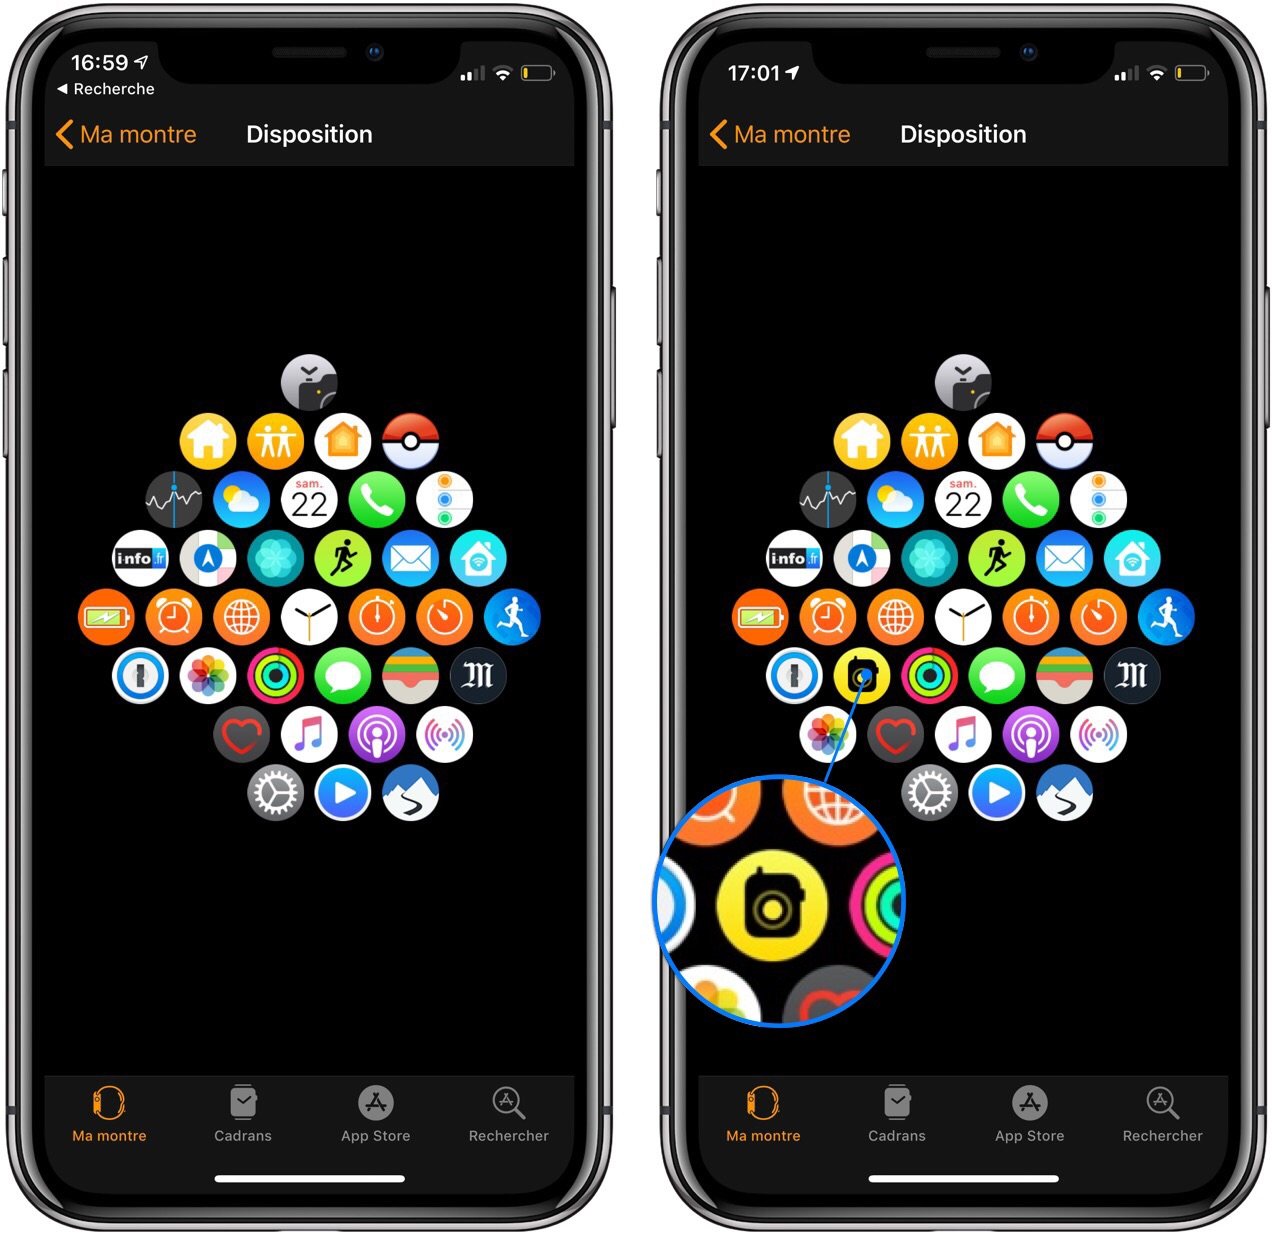 30 HQ Images Best Walkie Talkie App For Apple Watch / Walkie Talkie App on Apple Watch And How To Use It